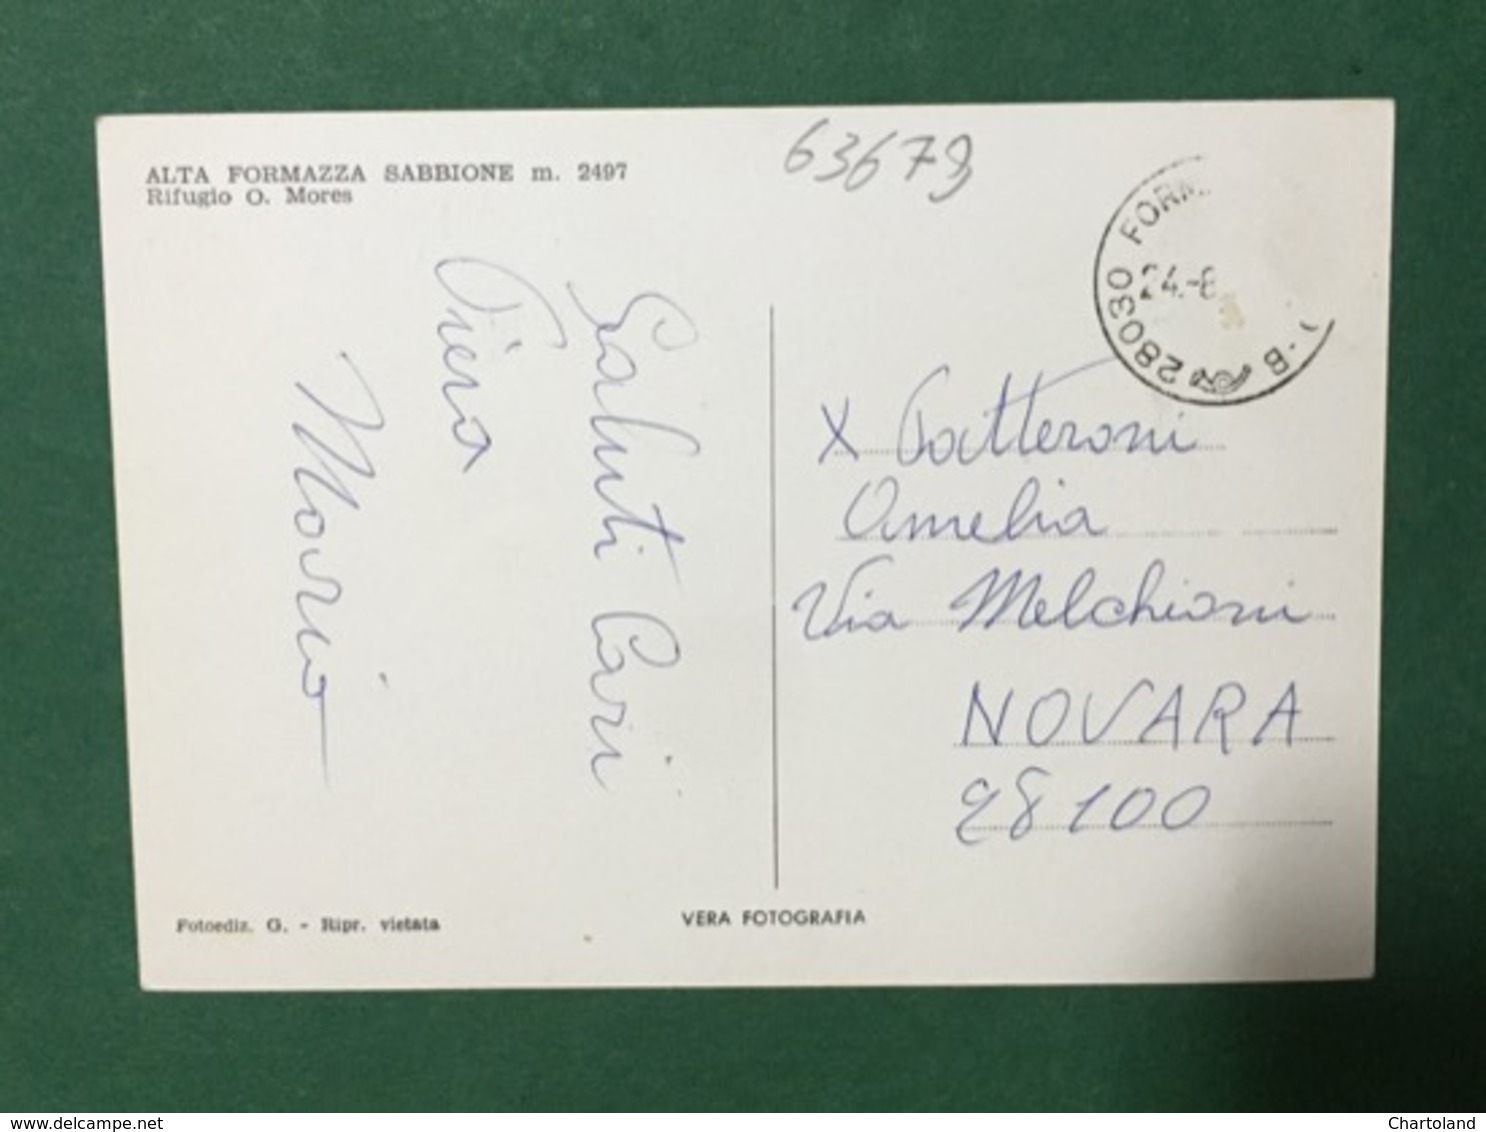 Cartolina Alta Formazza Sabbione - Rifugio O Mores - 1959 Ca. - Verbania